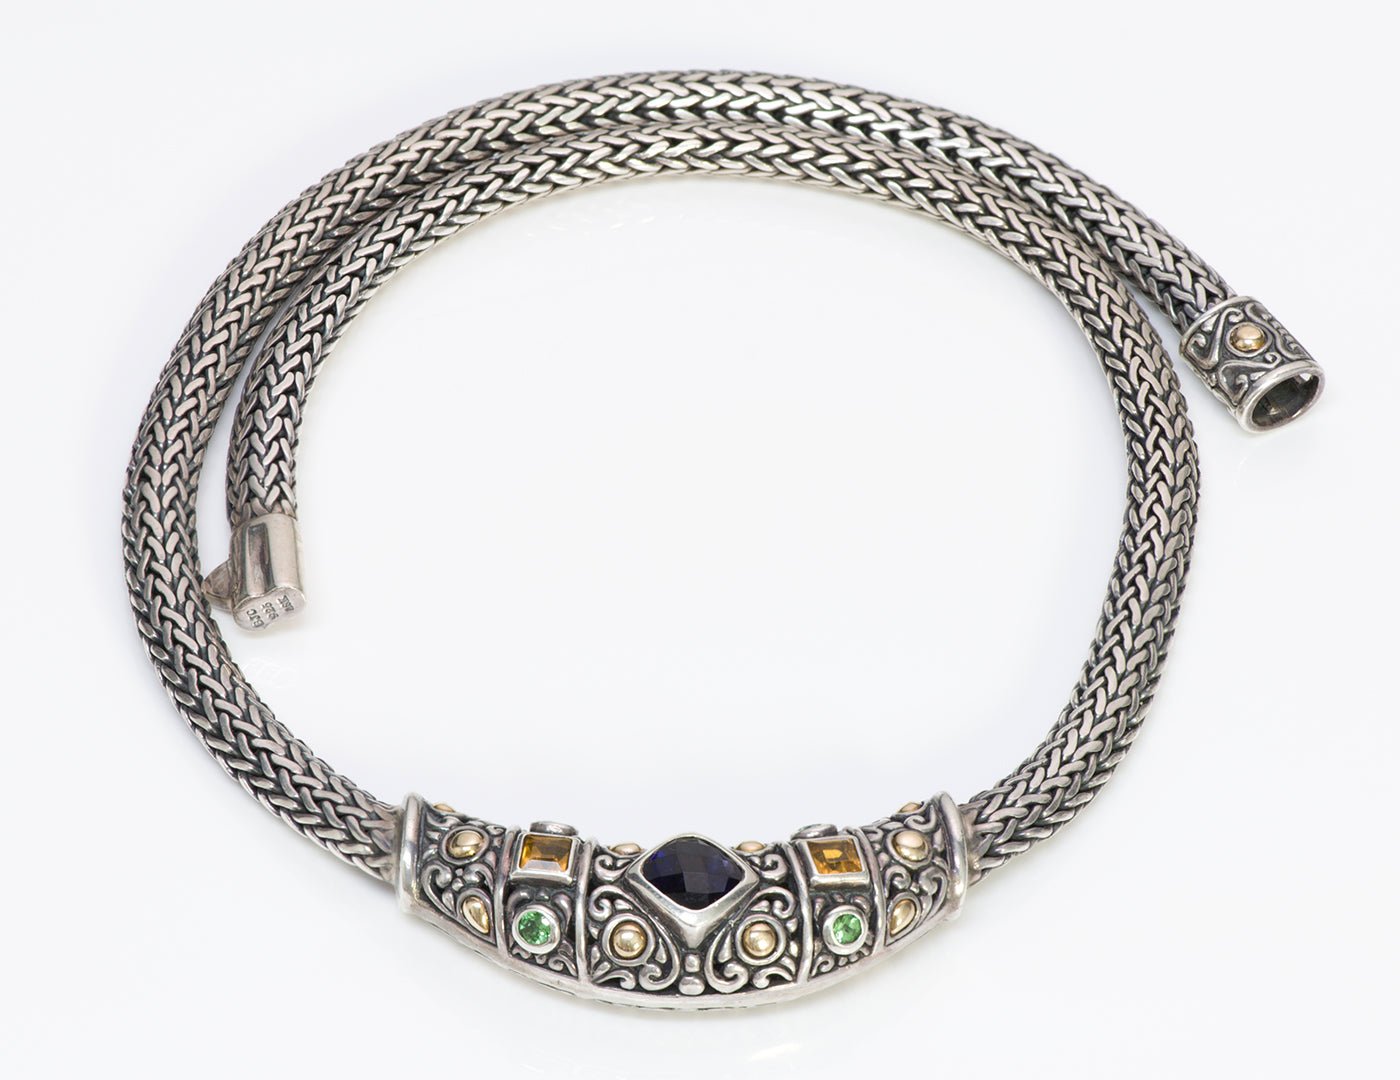 Samuel Benham BJC Gold & Sterling Silver Necklace